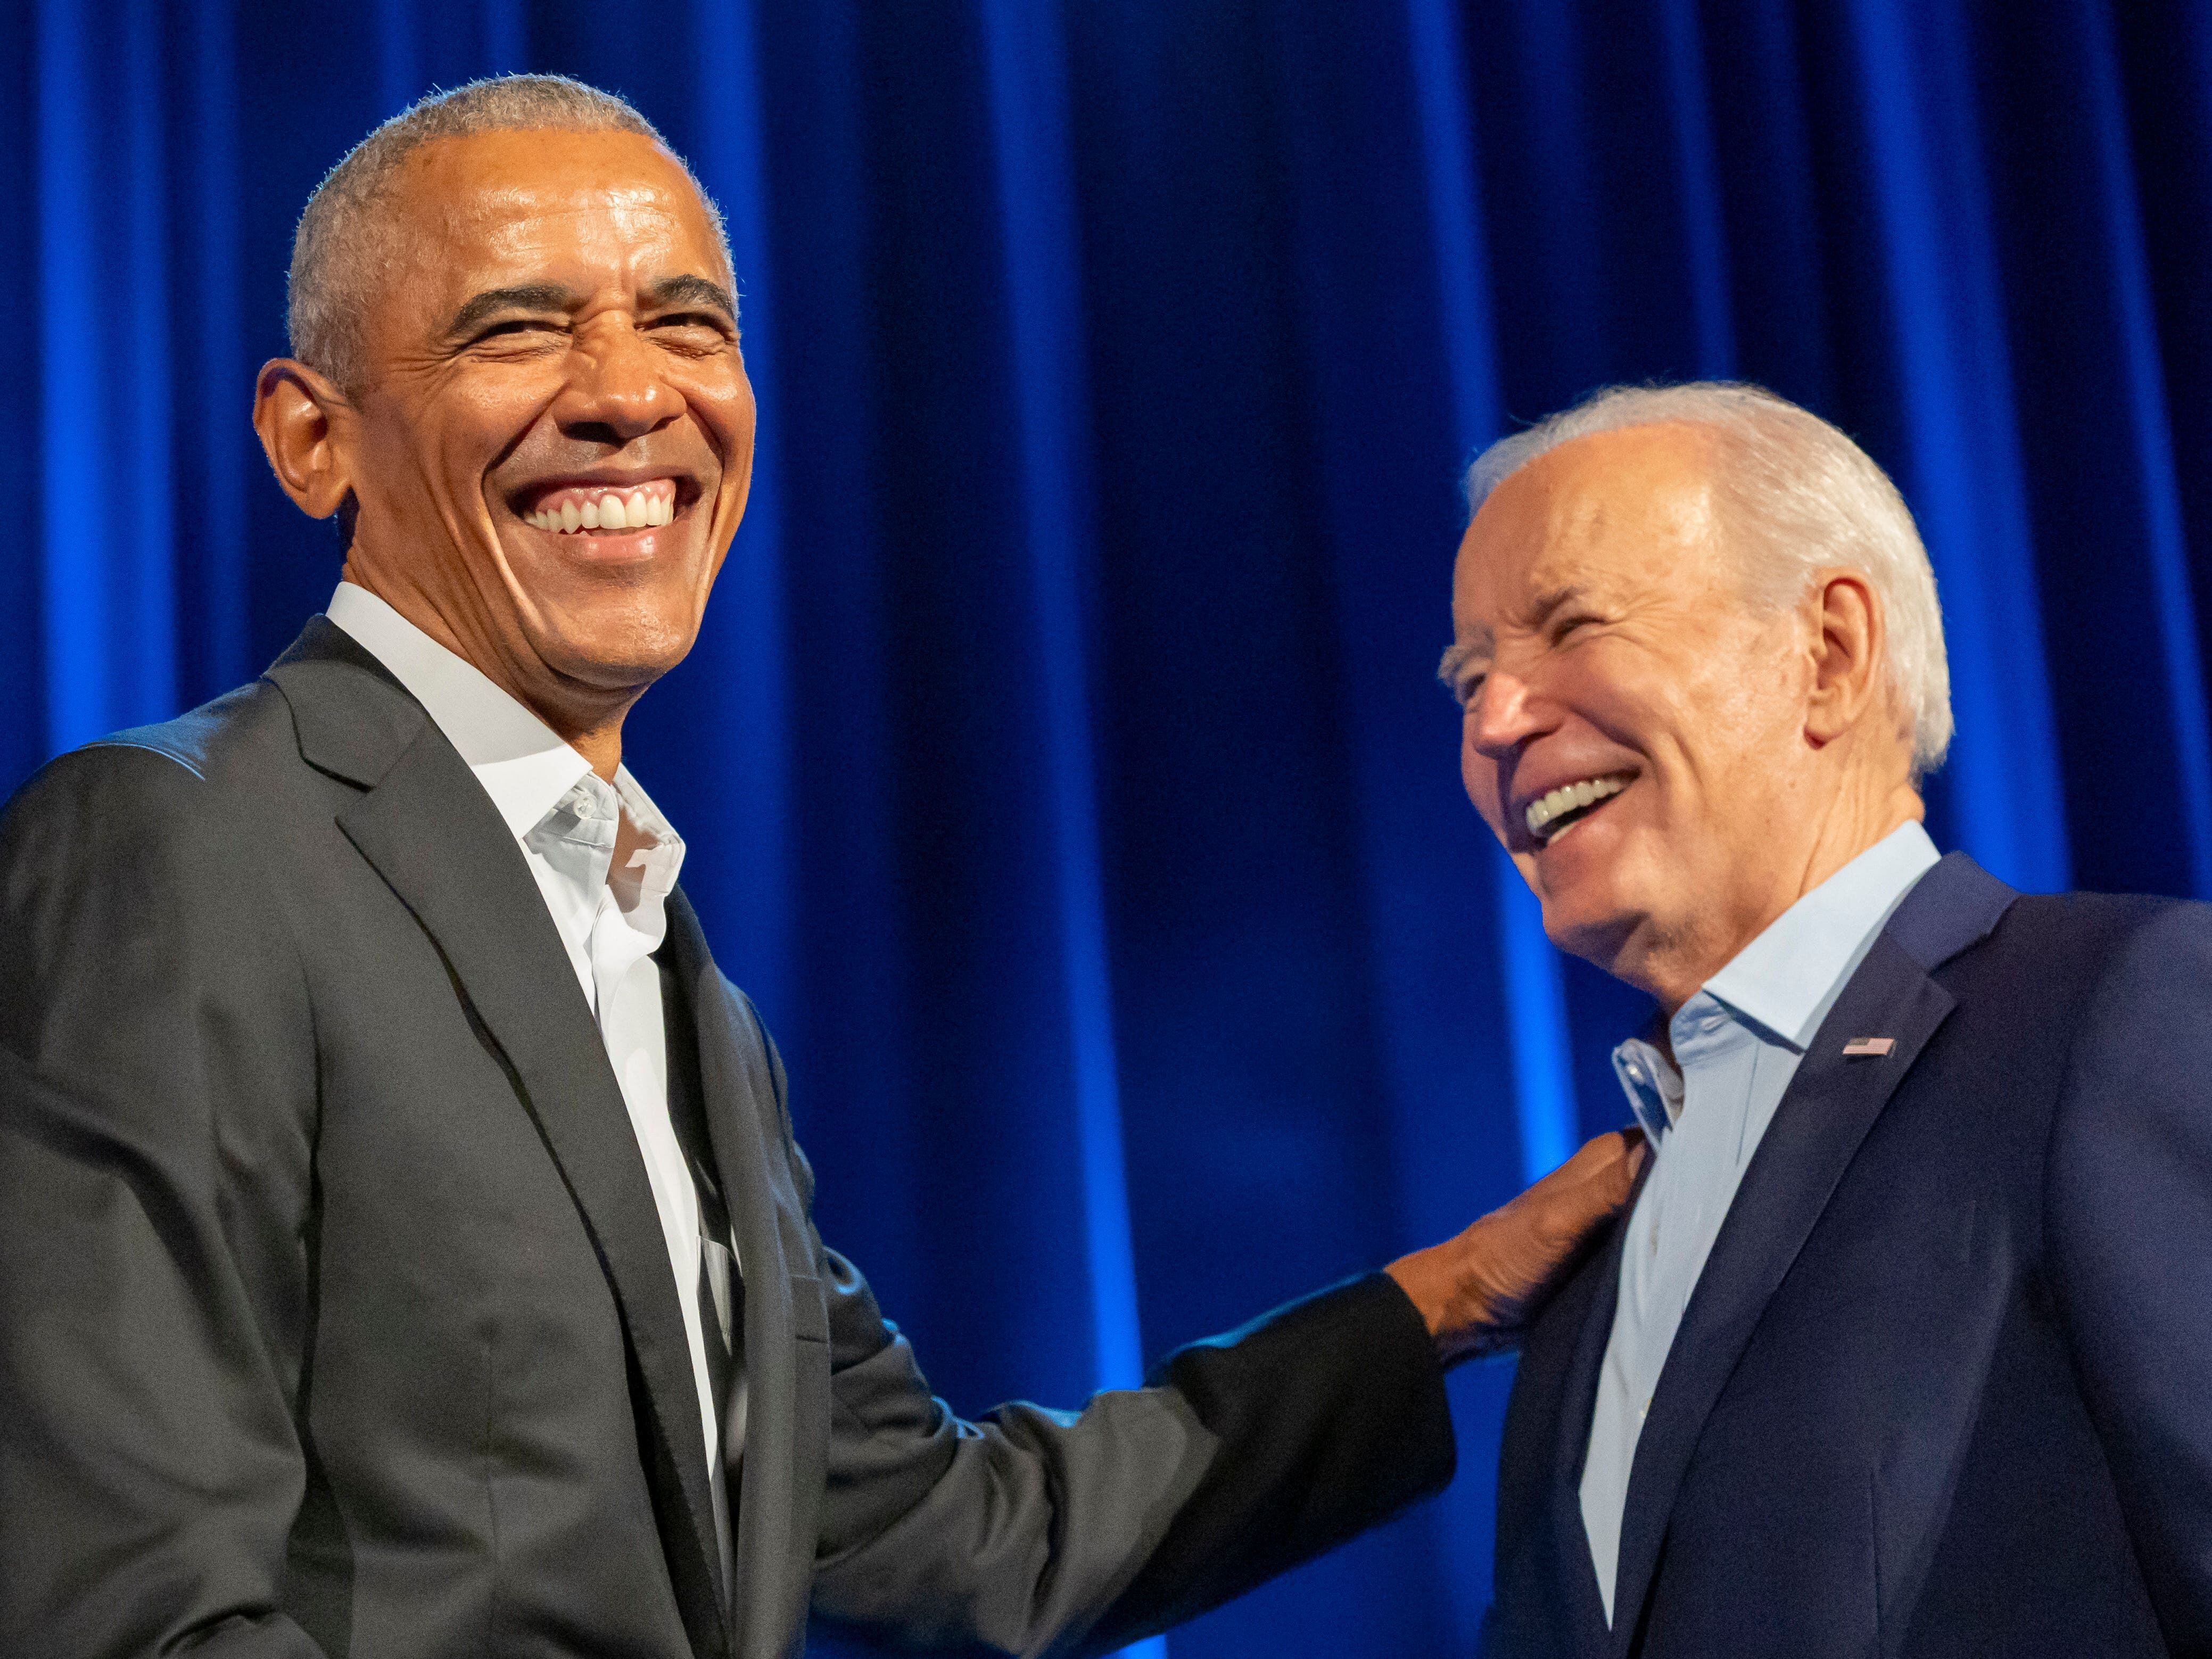 Former presidents help Joe Biden raise £20 million for campaign